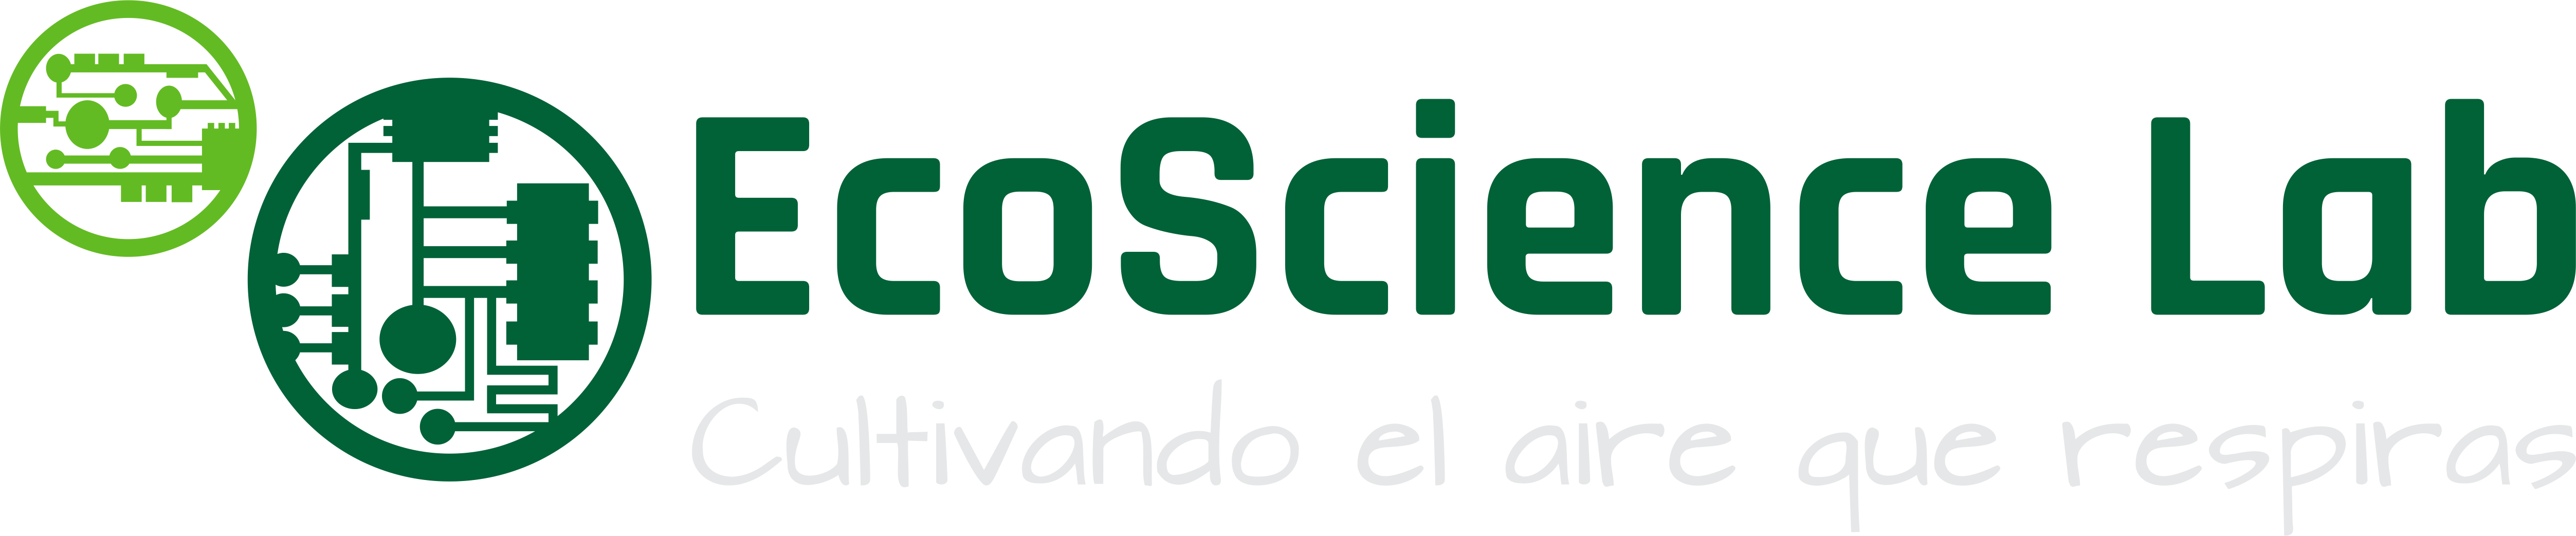 EcoScience Lab